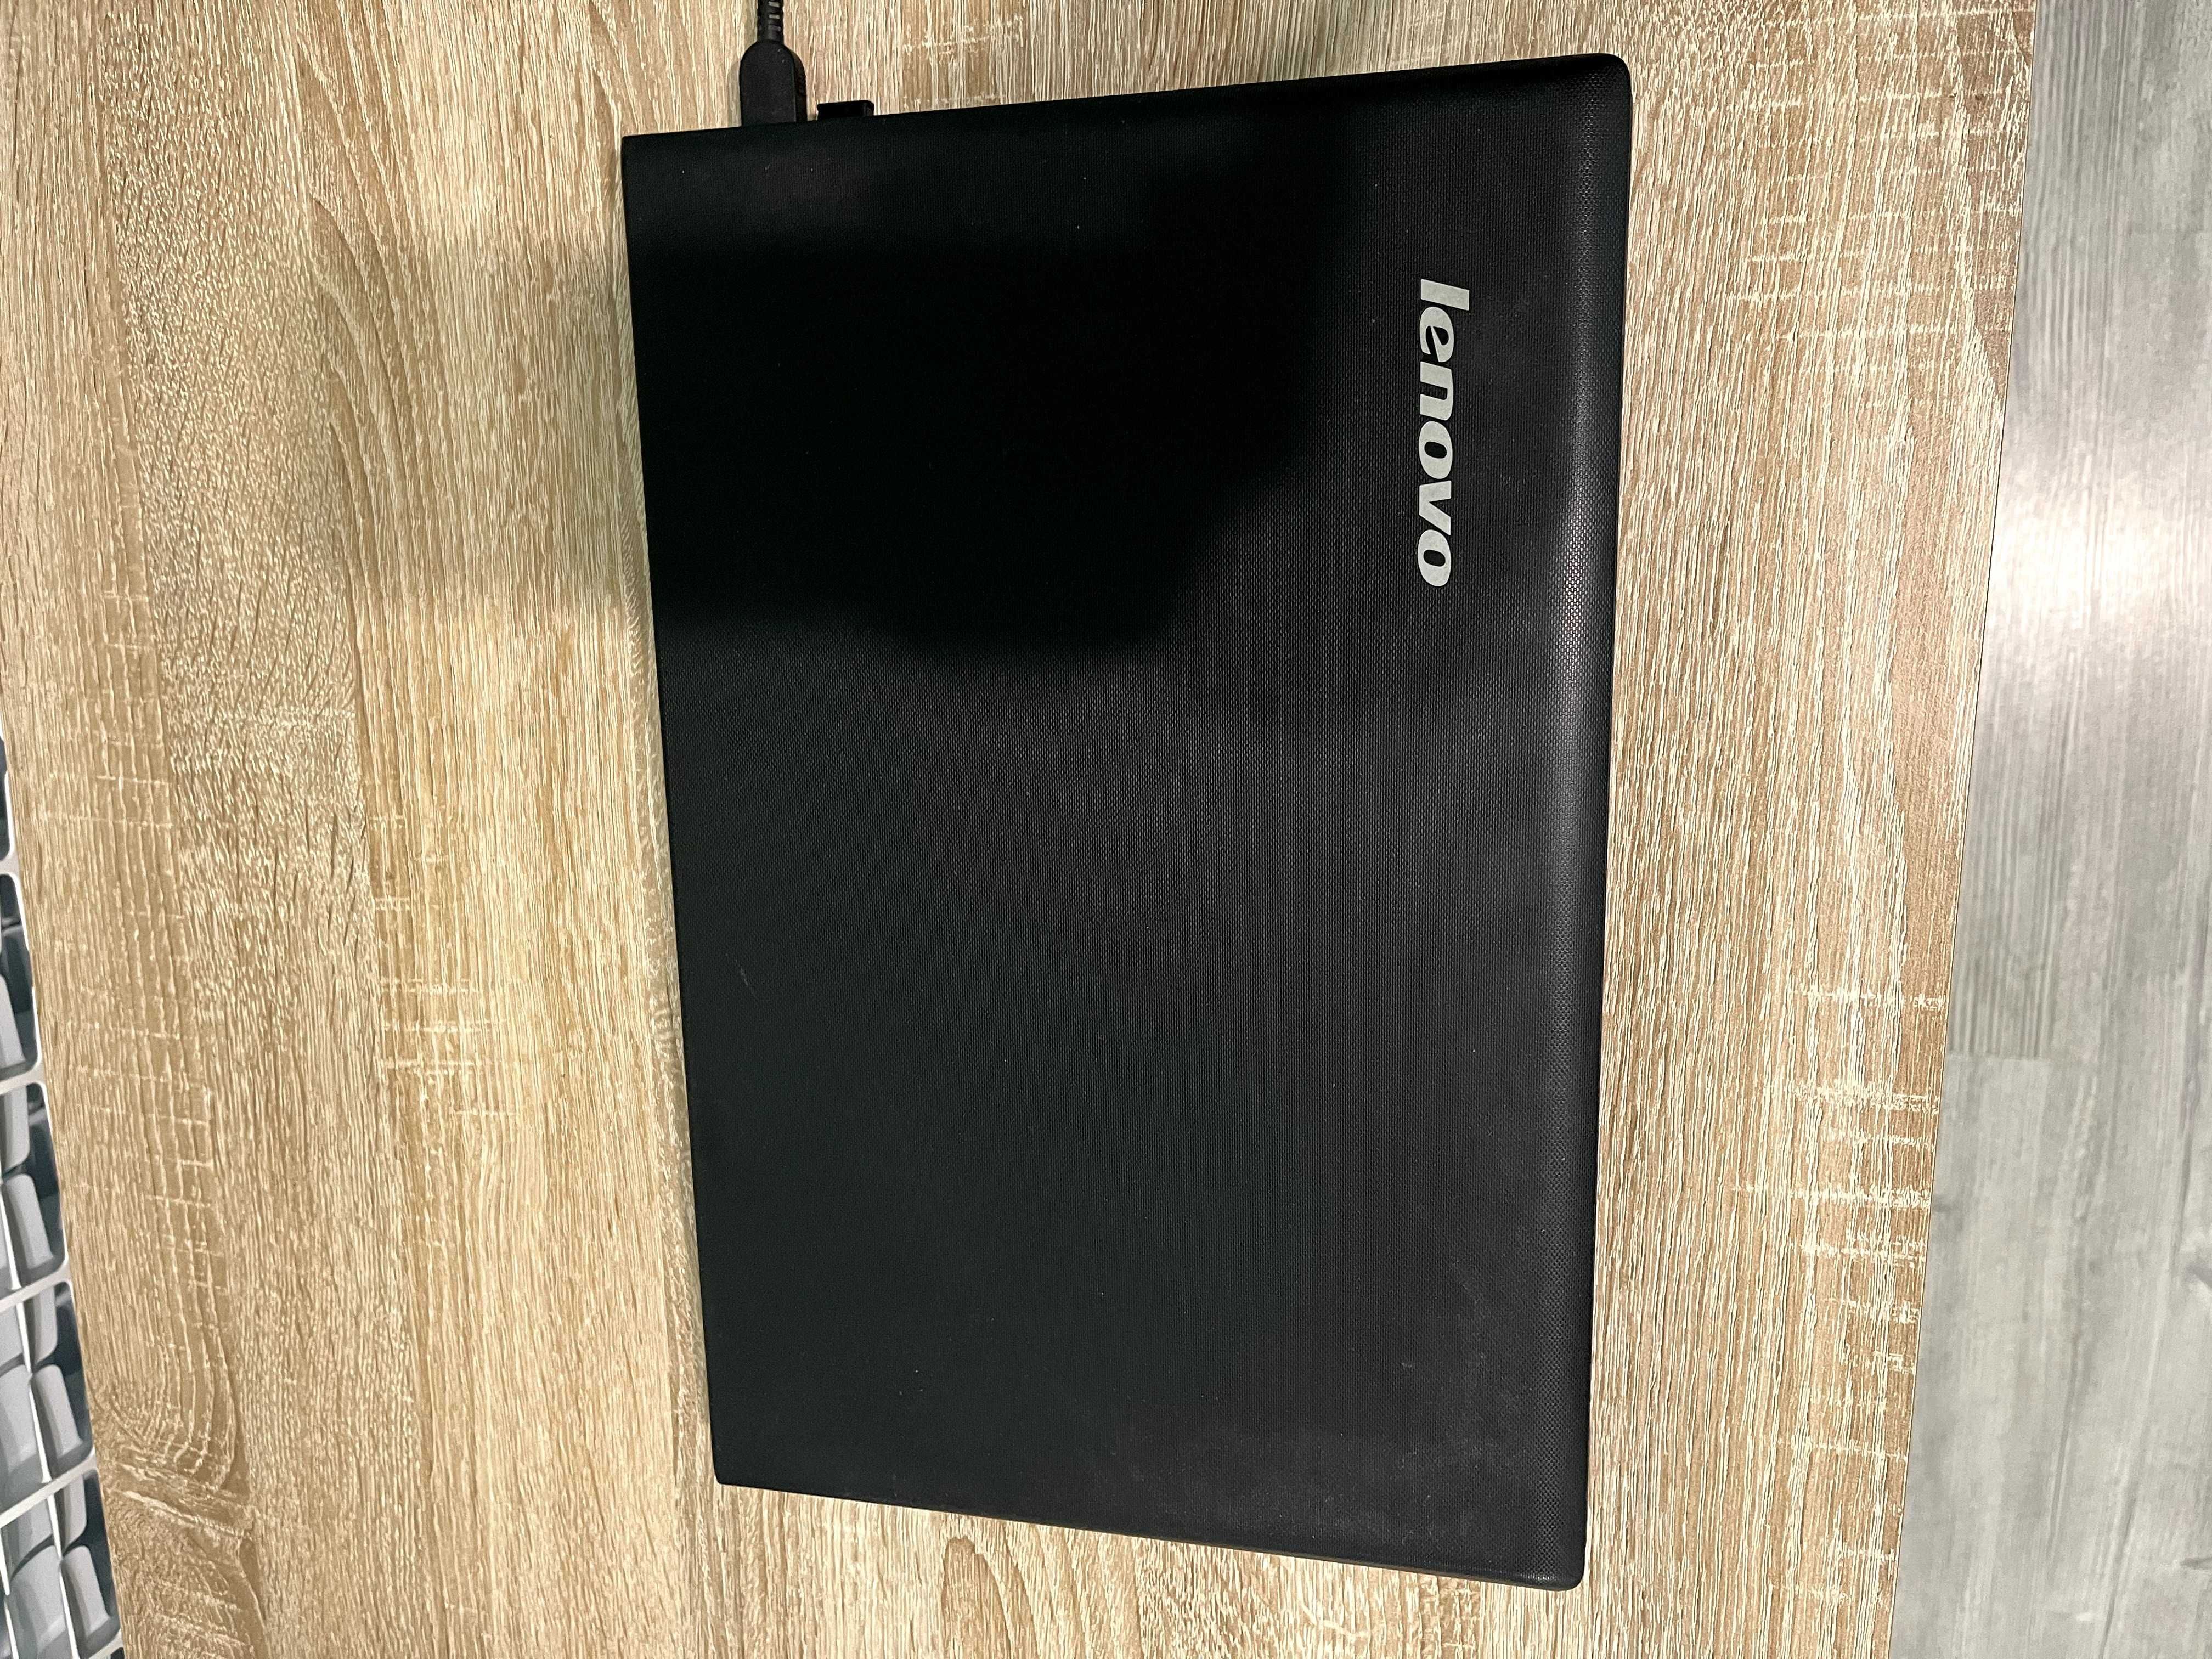 Leptop Lenovo G500 i7-3612, 1TB , 6GB ram